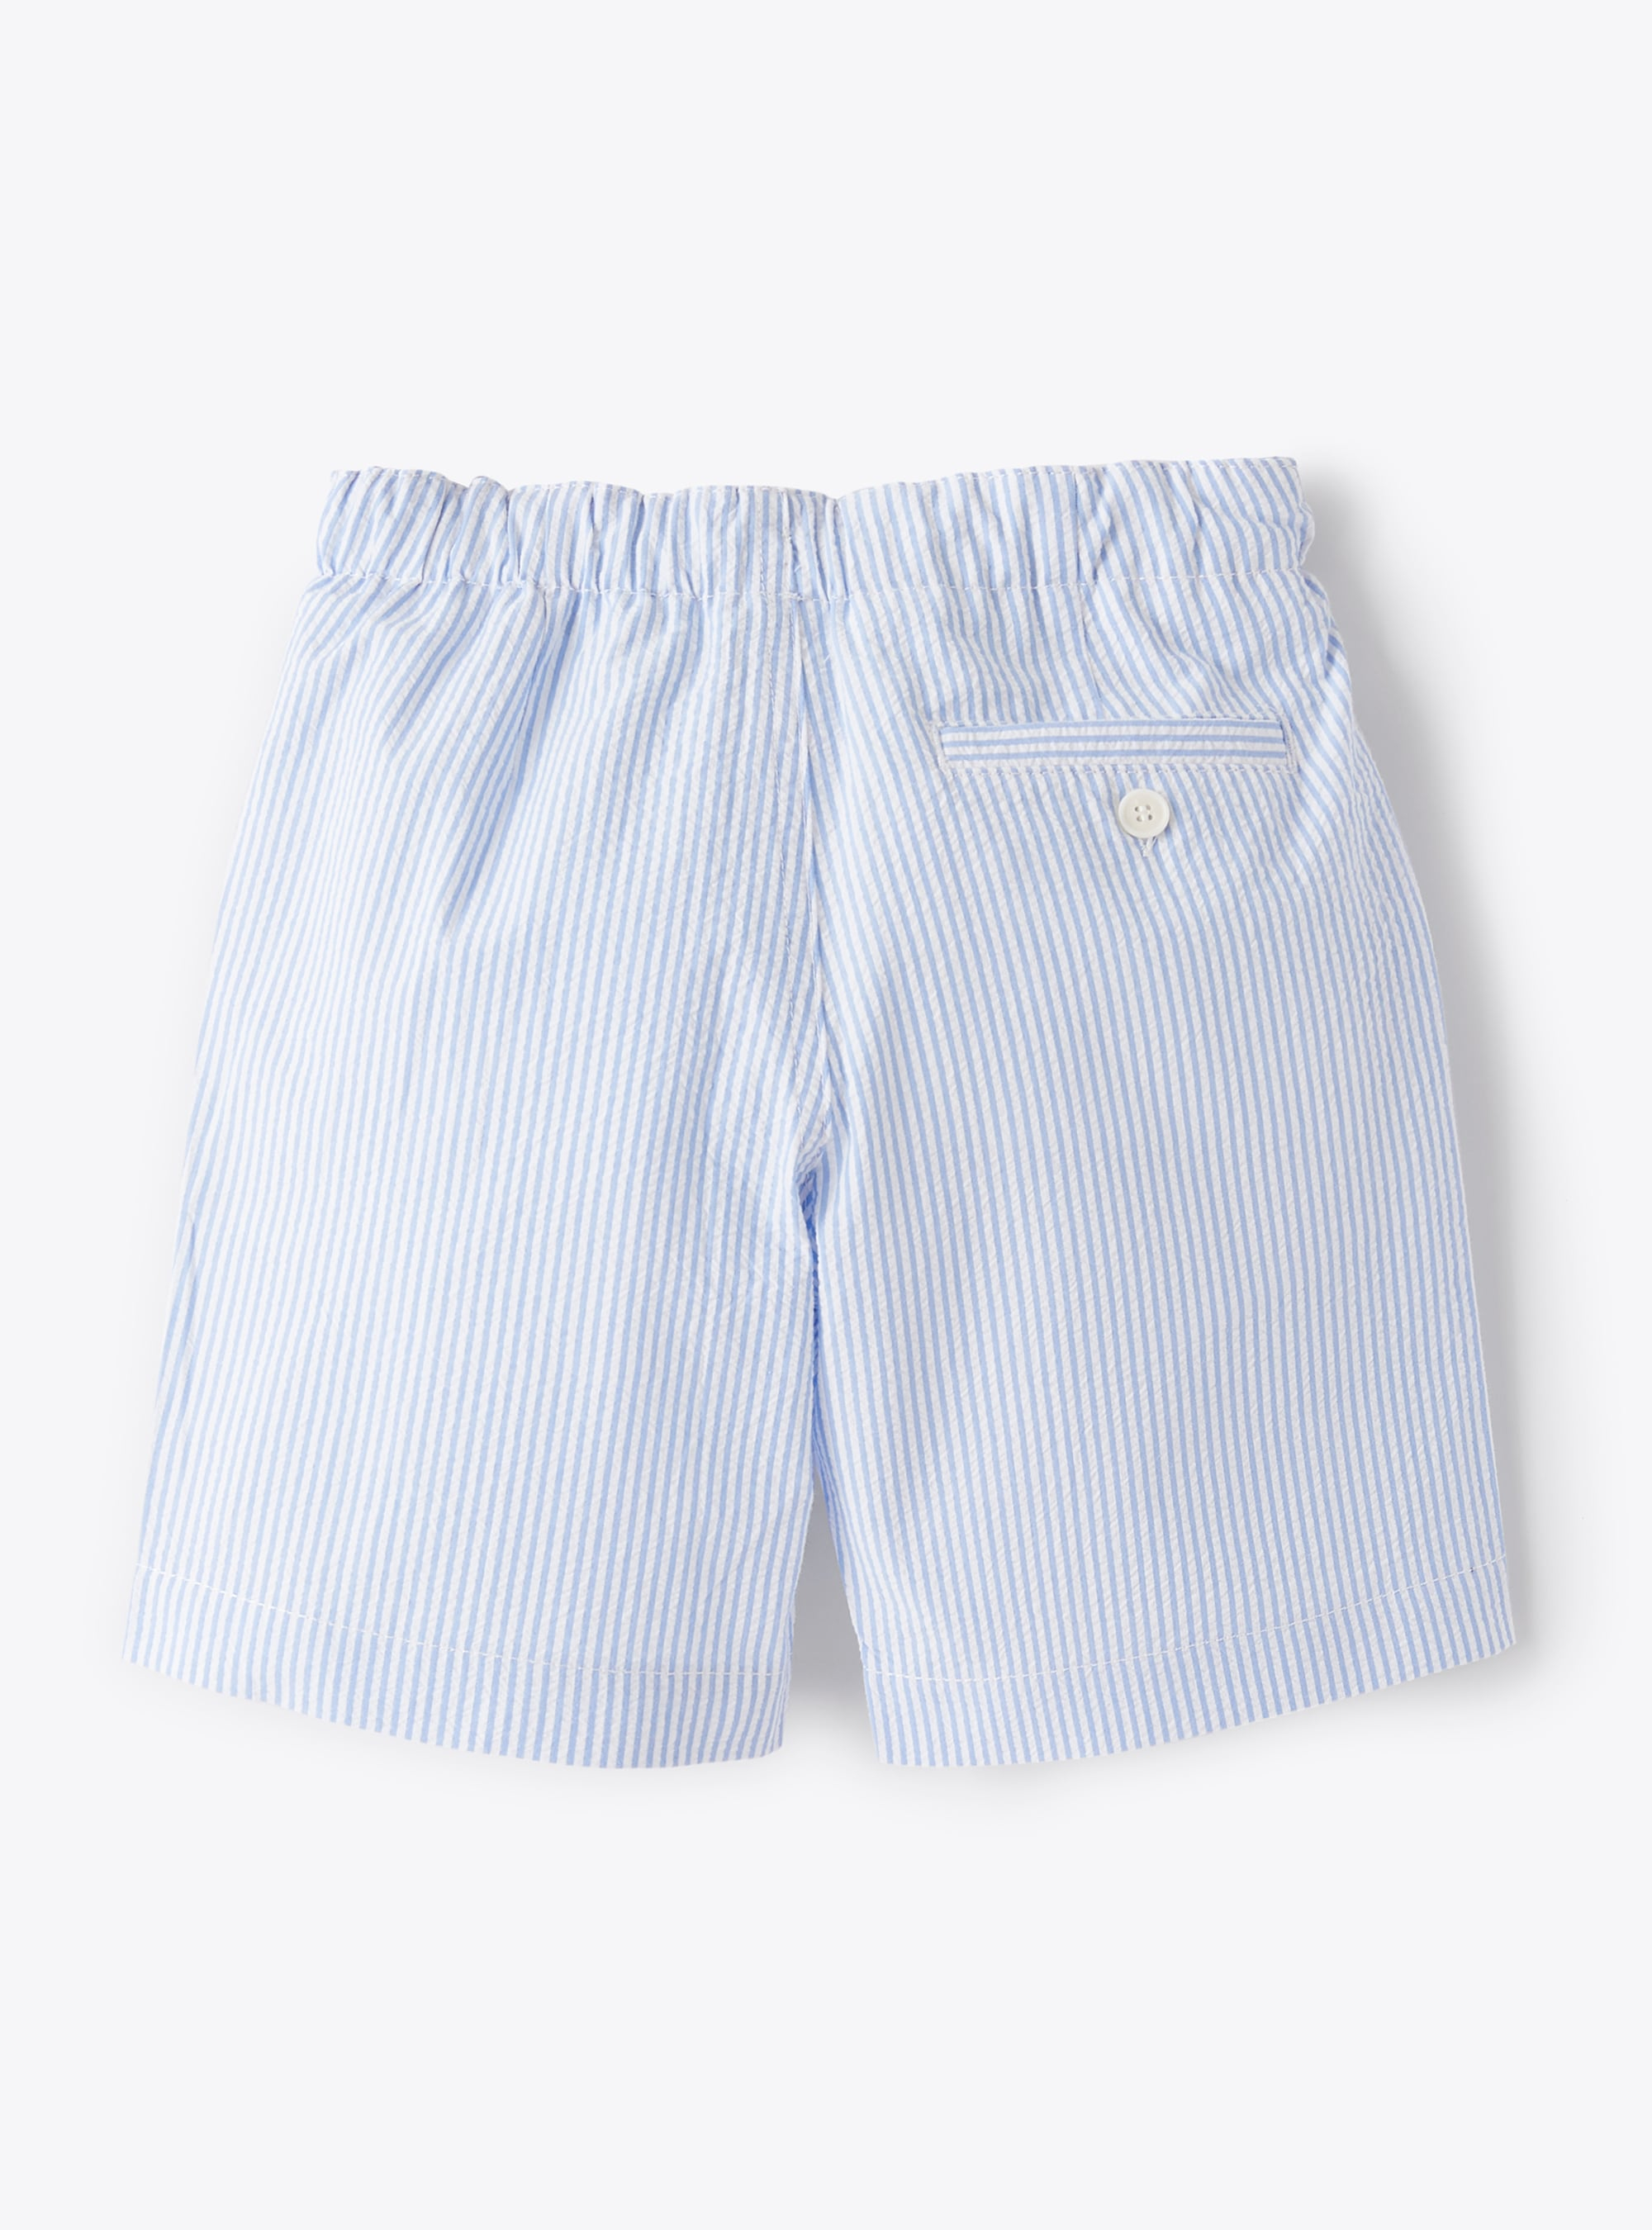 Bermuda shorts in light-blue seersucker - Light blue | Il Gufo